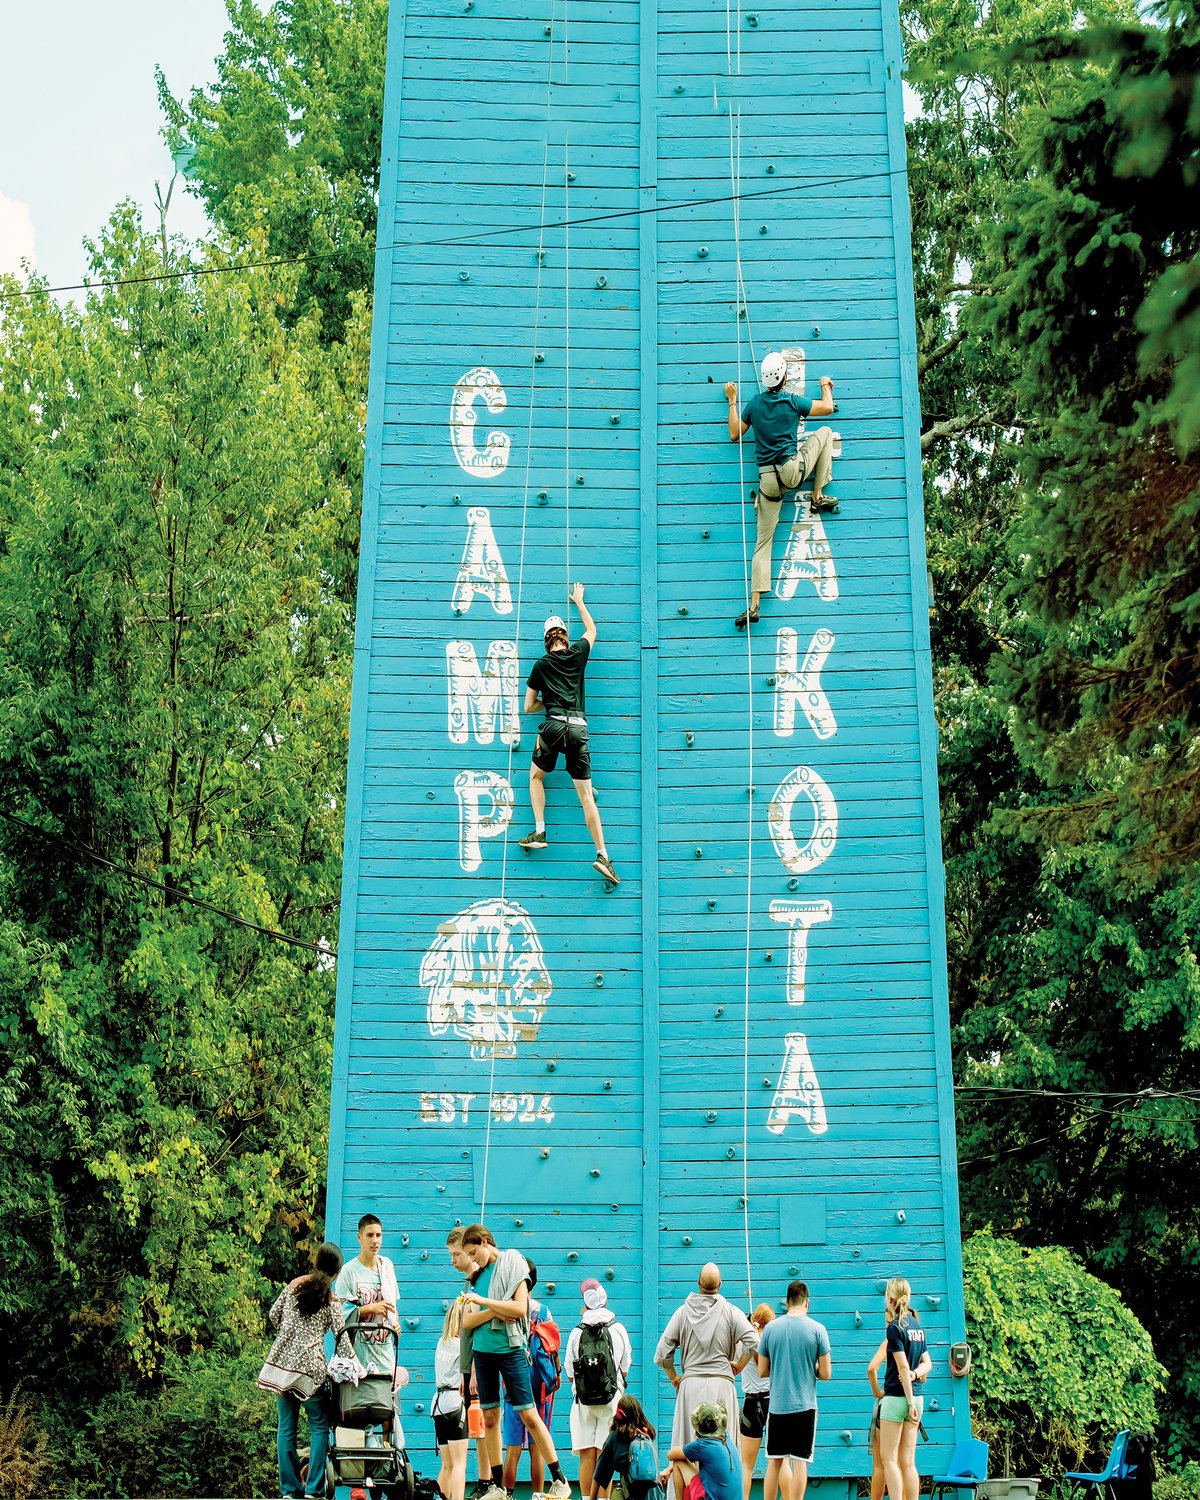 The climbing wall was hard to resist at Camp Veritas Aug. 18 at Camp Lakota in Sullivan County.